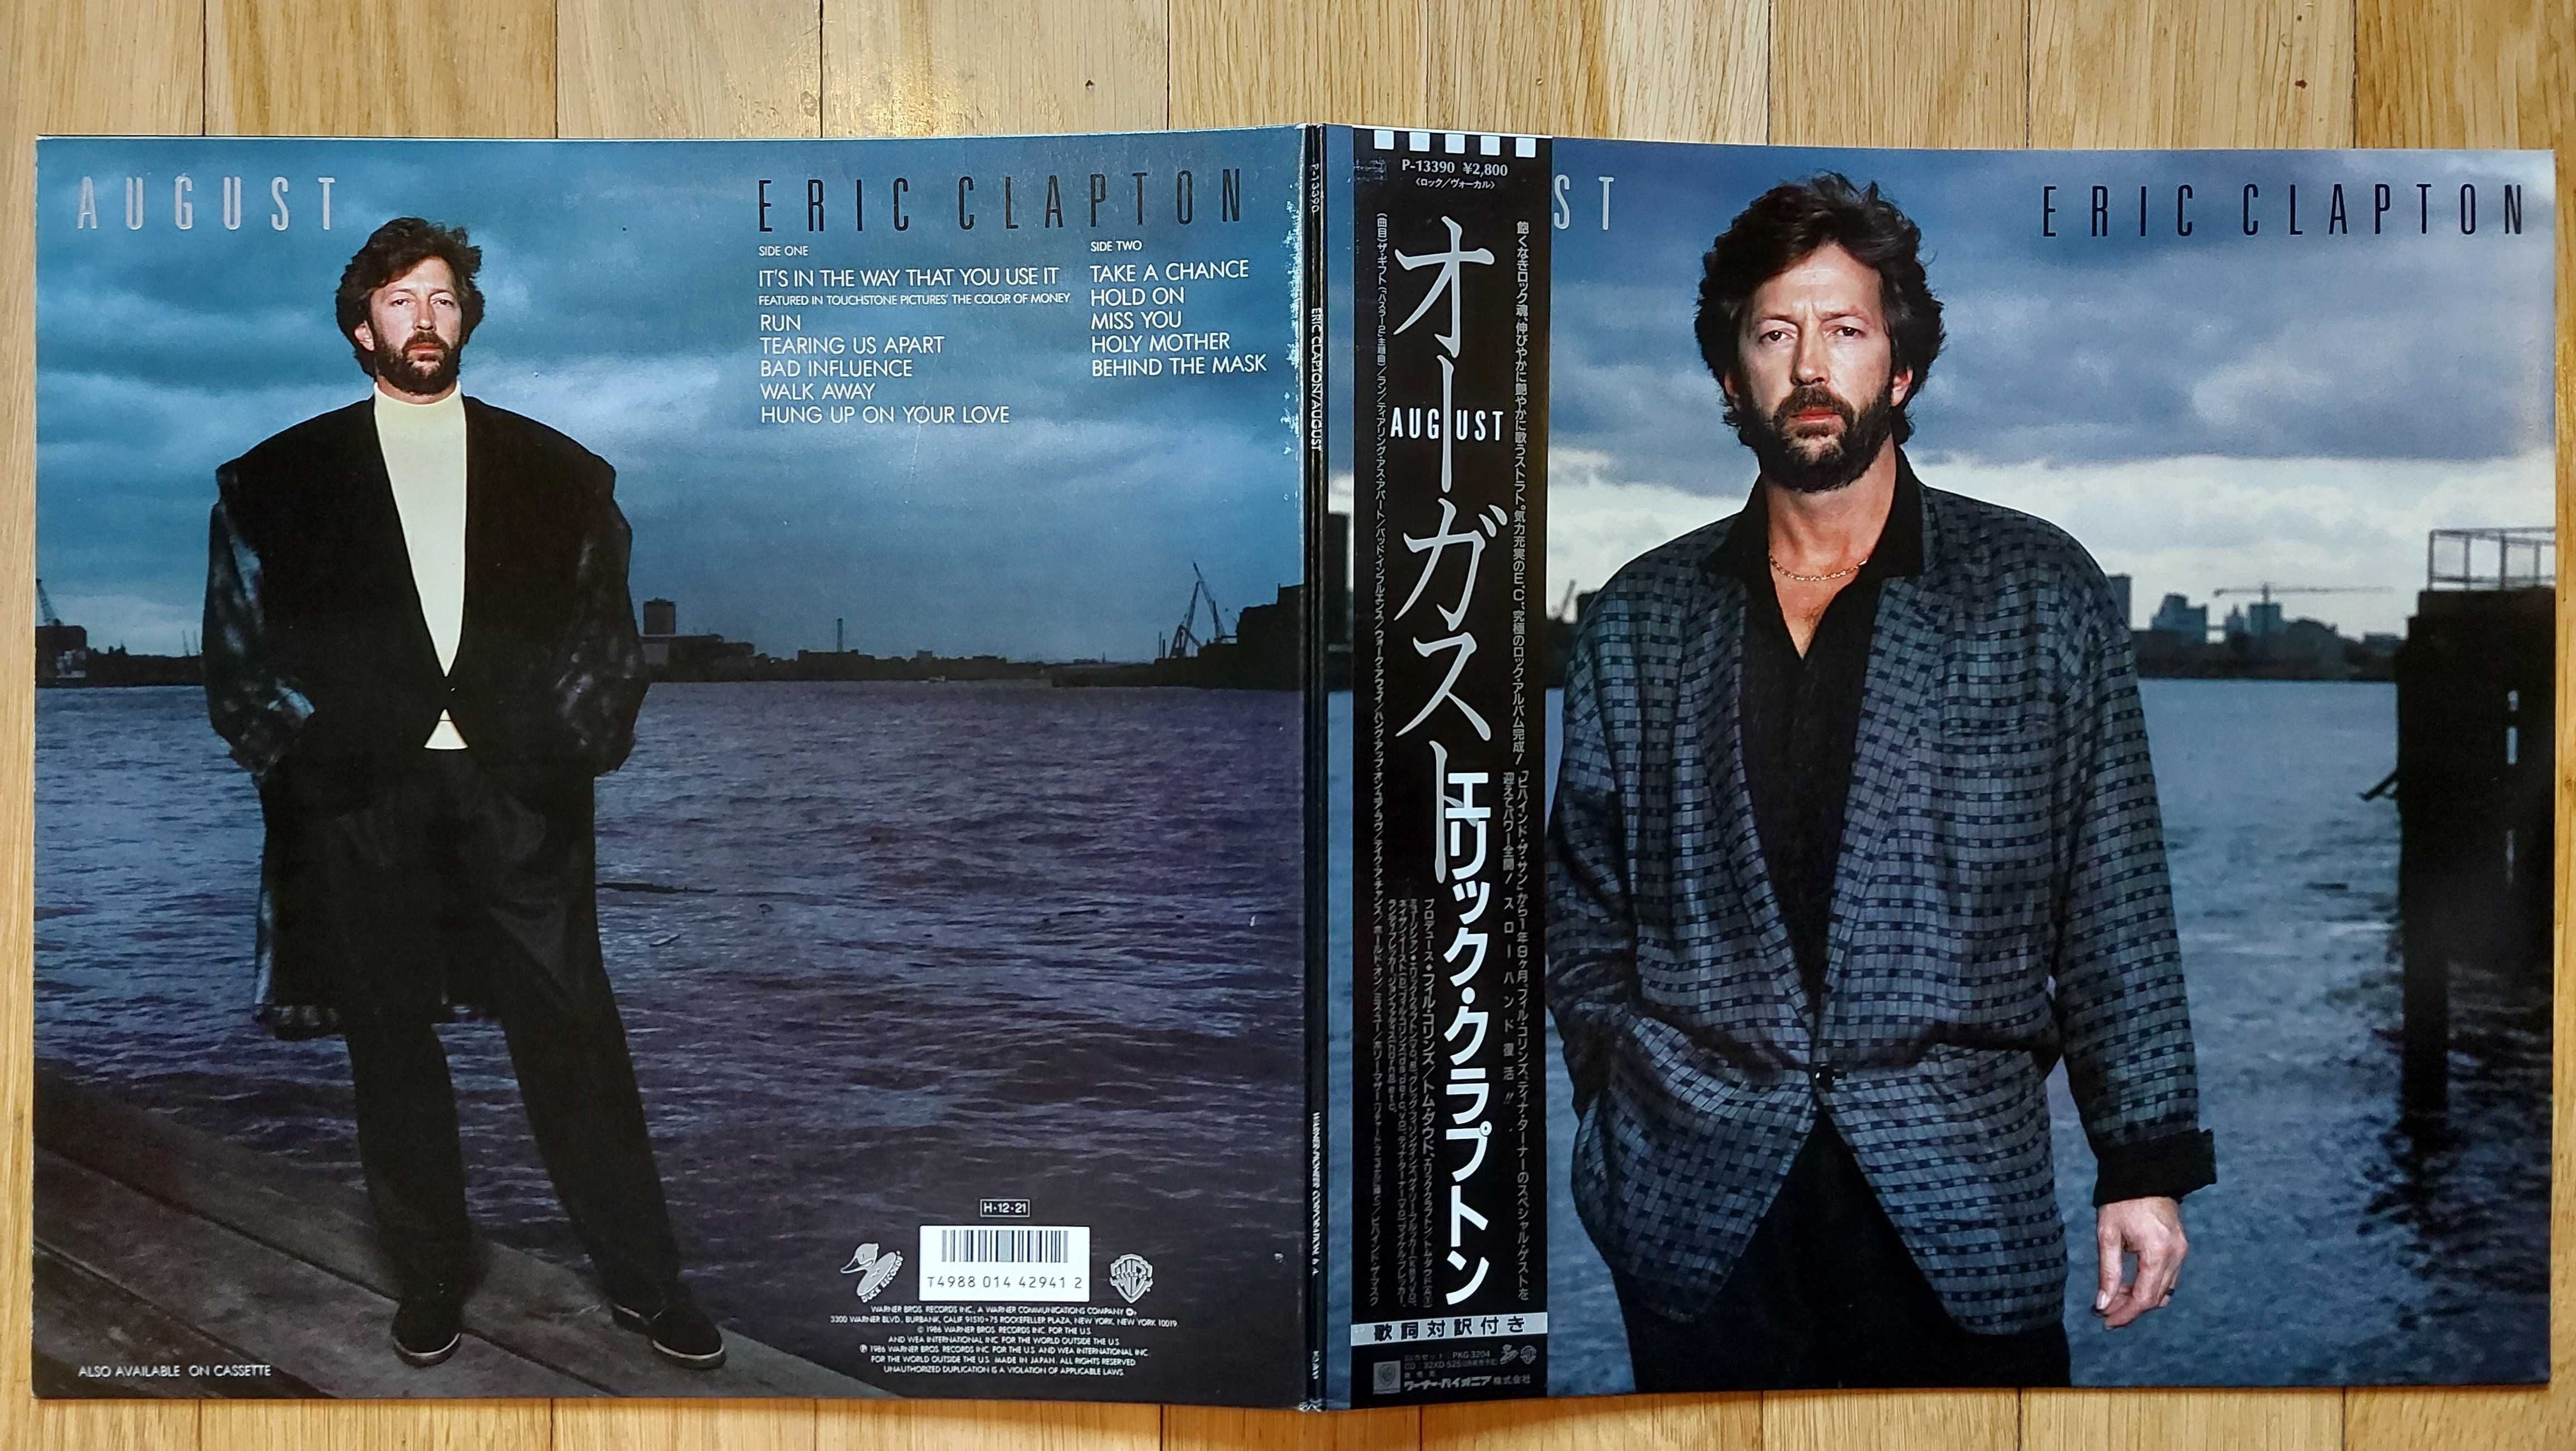 Eric Clapton, August, Japan, 21 Dec 1986, (NM/NM)  + inne tytuły